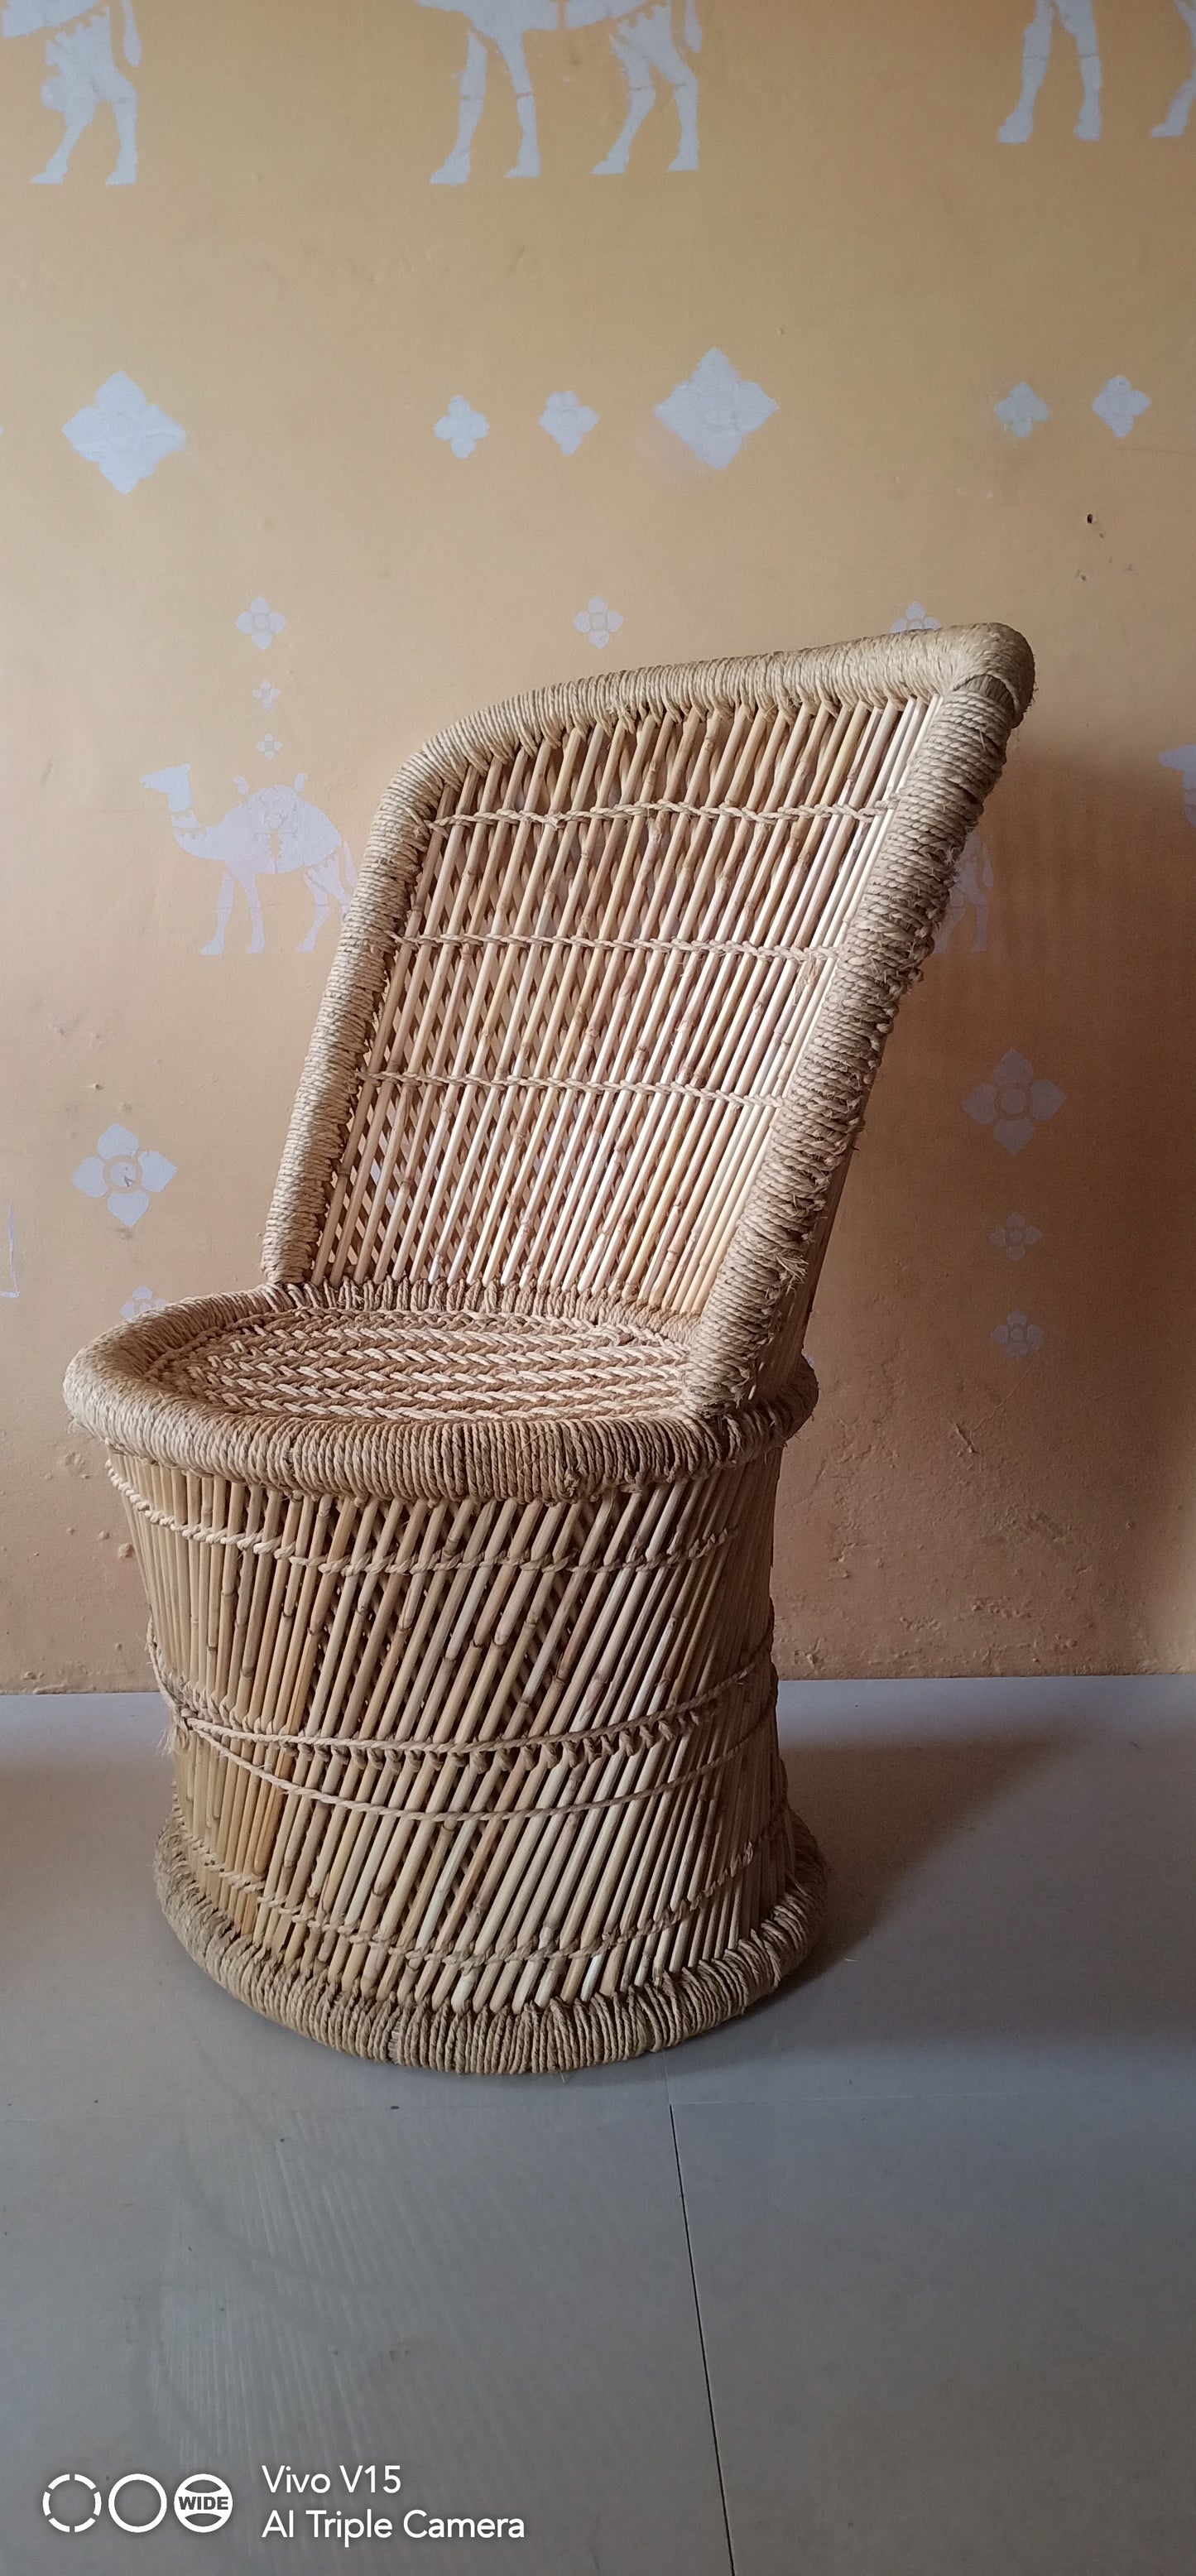 Bamboo Mudda Weaving Round Outdoor Chair